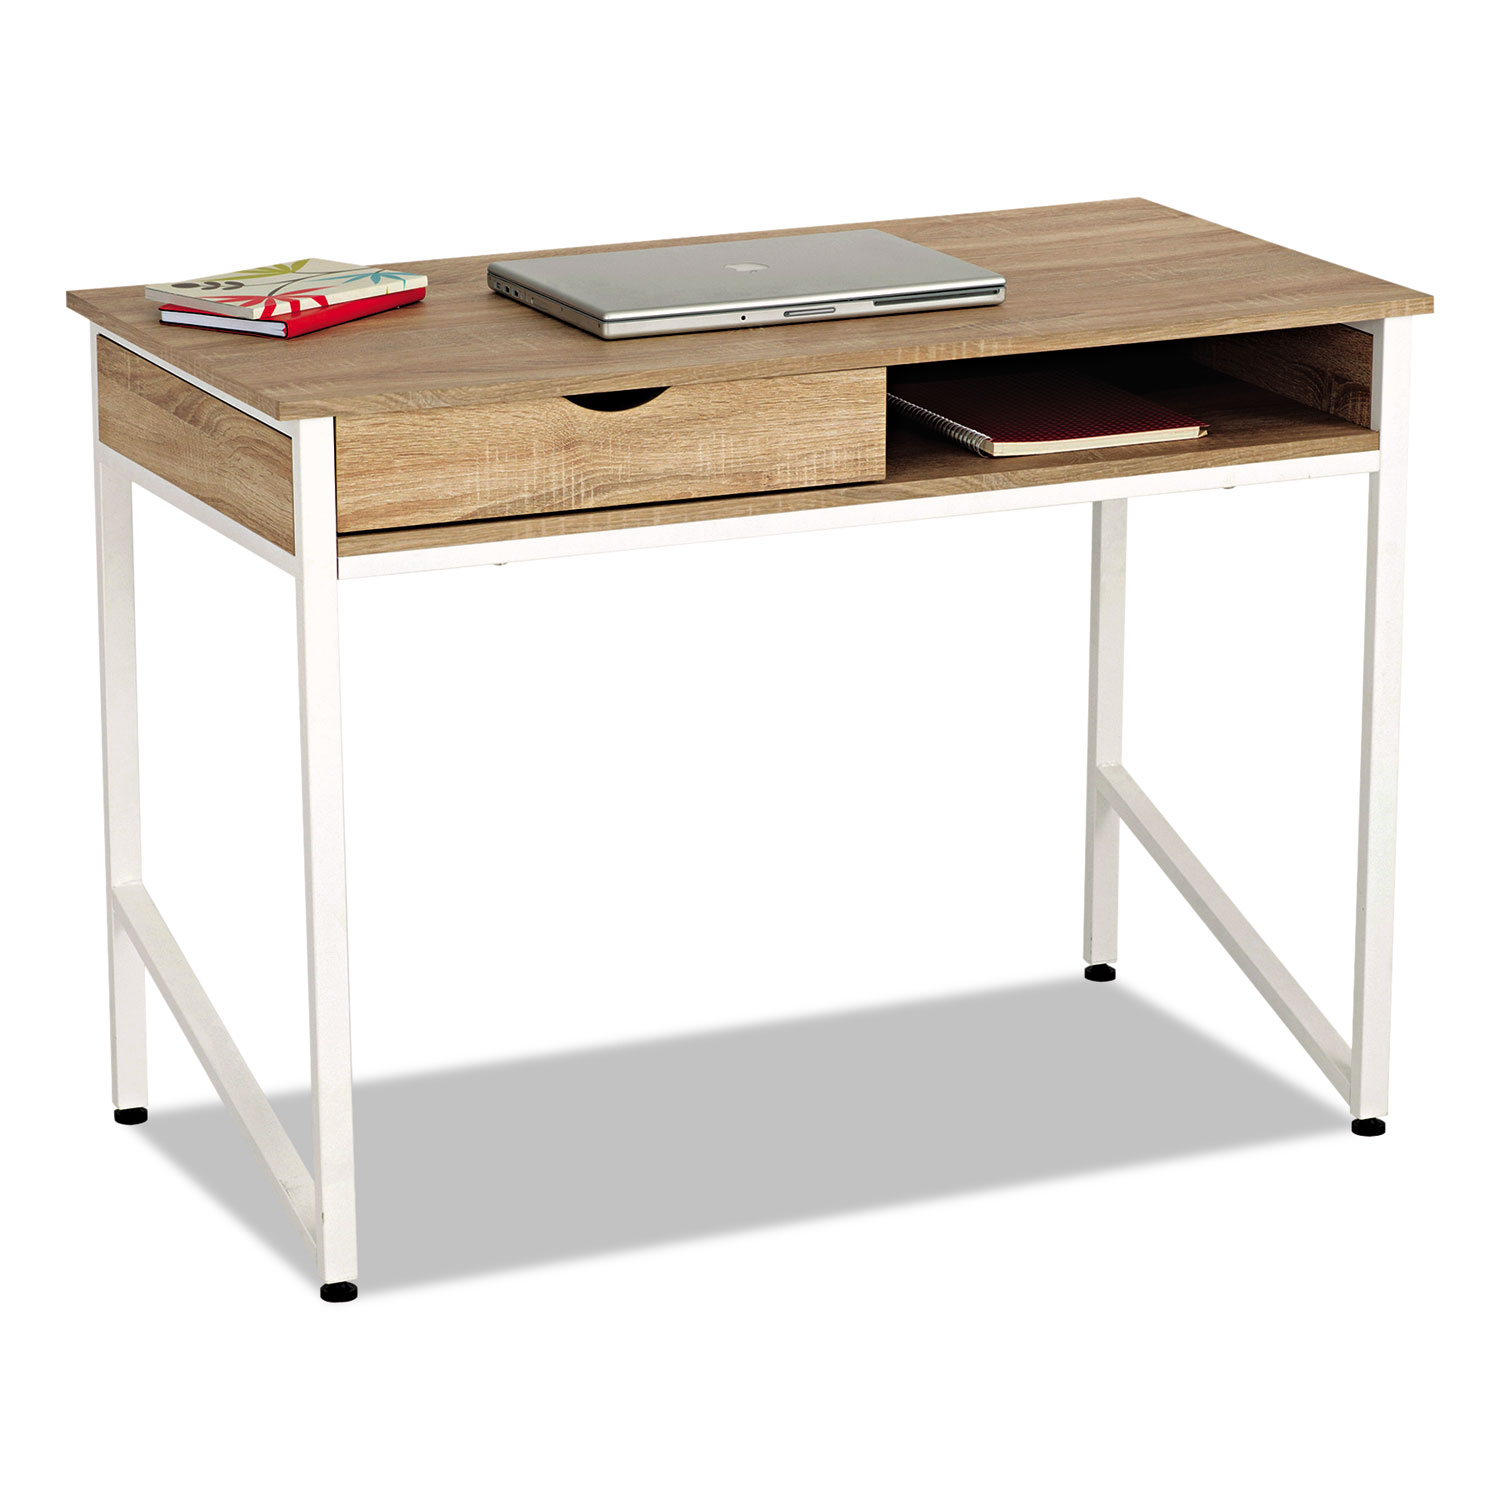 Single Drawer Office Desk, 43 1/4 x 21 5/8 x 30 3/4, Beech/White